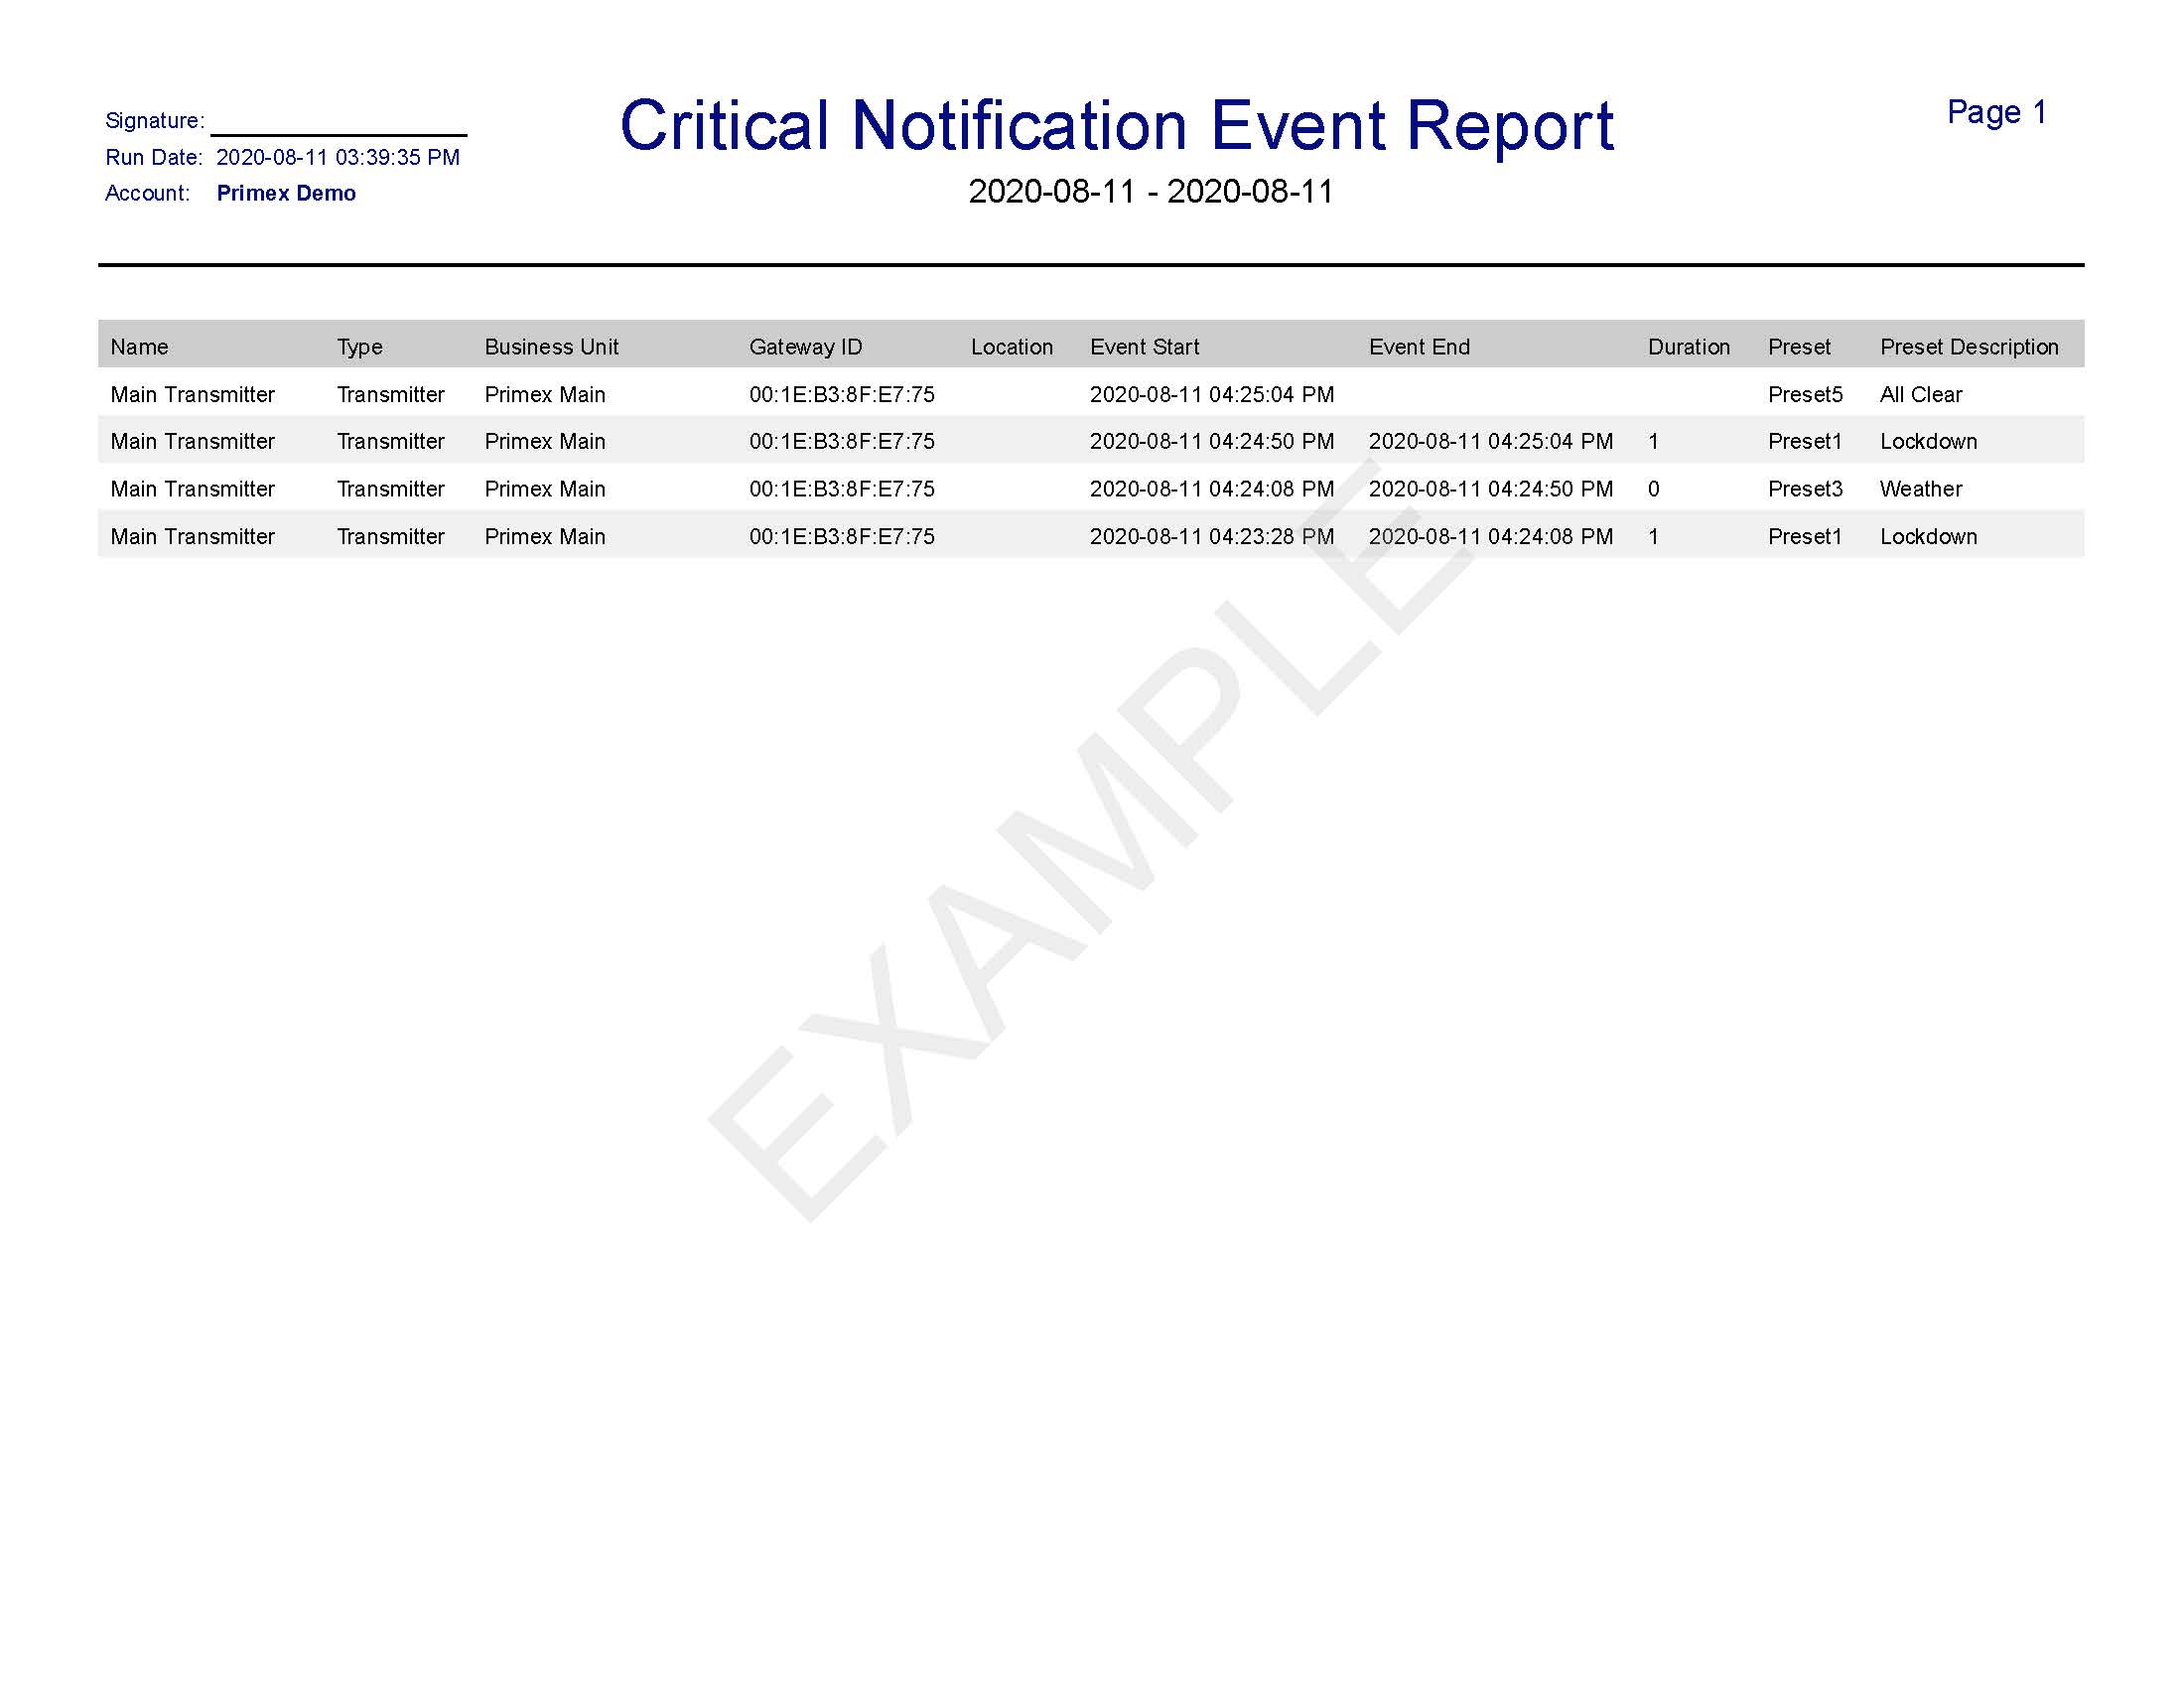 report-critical-notification-event.pdf